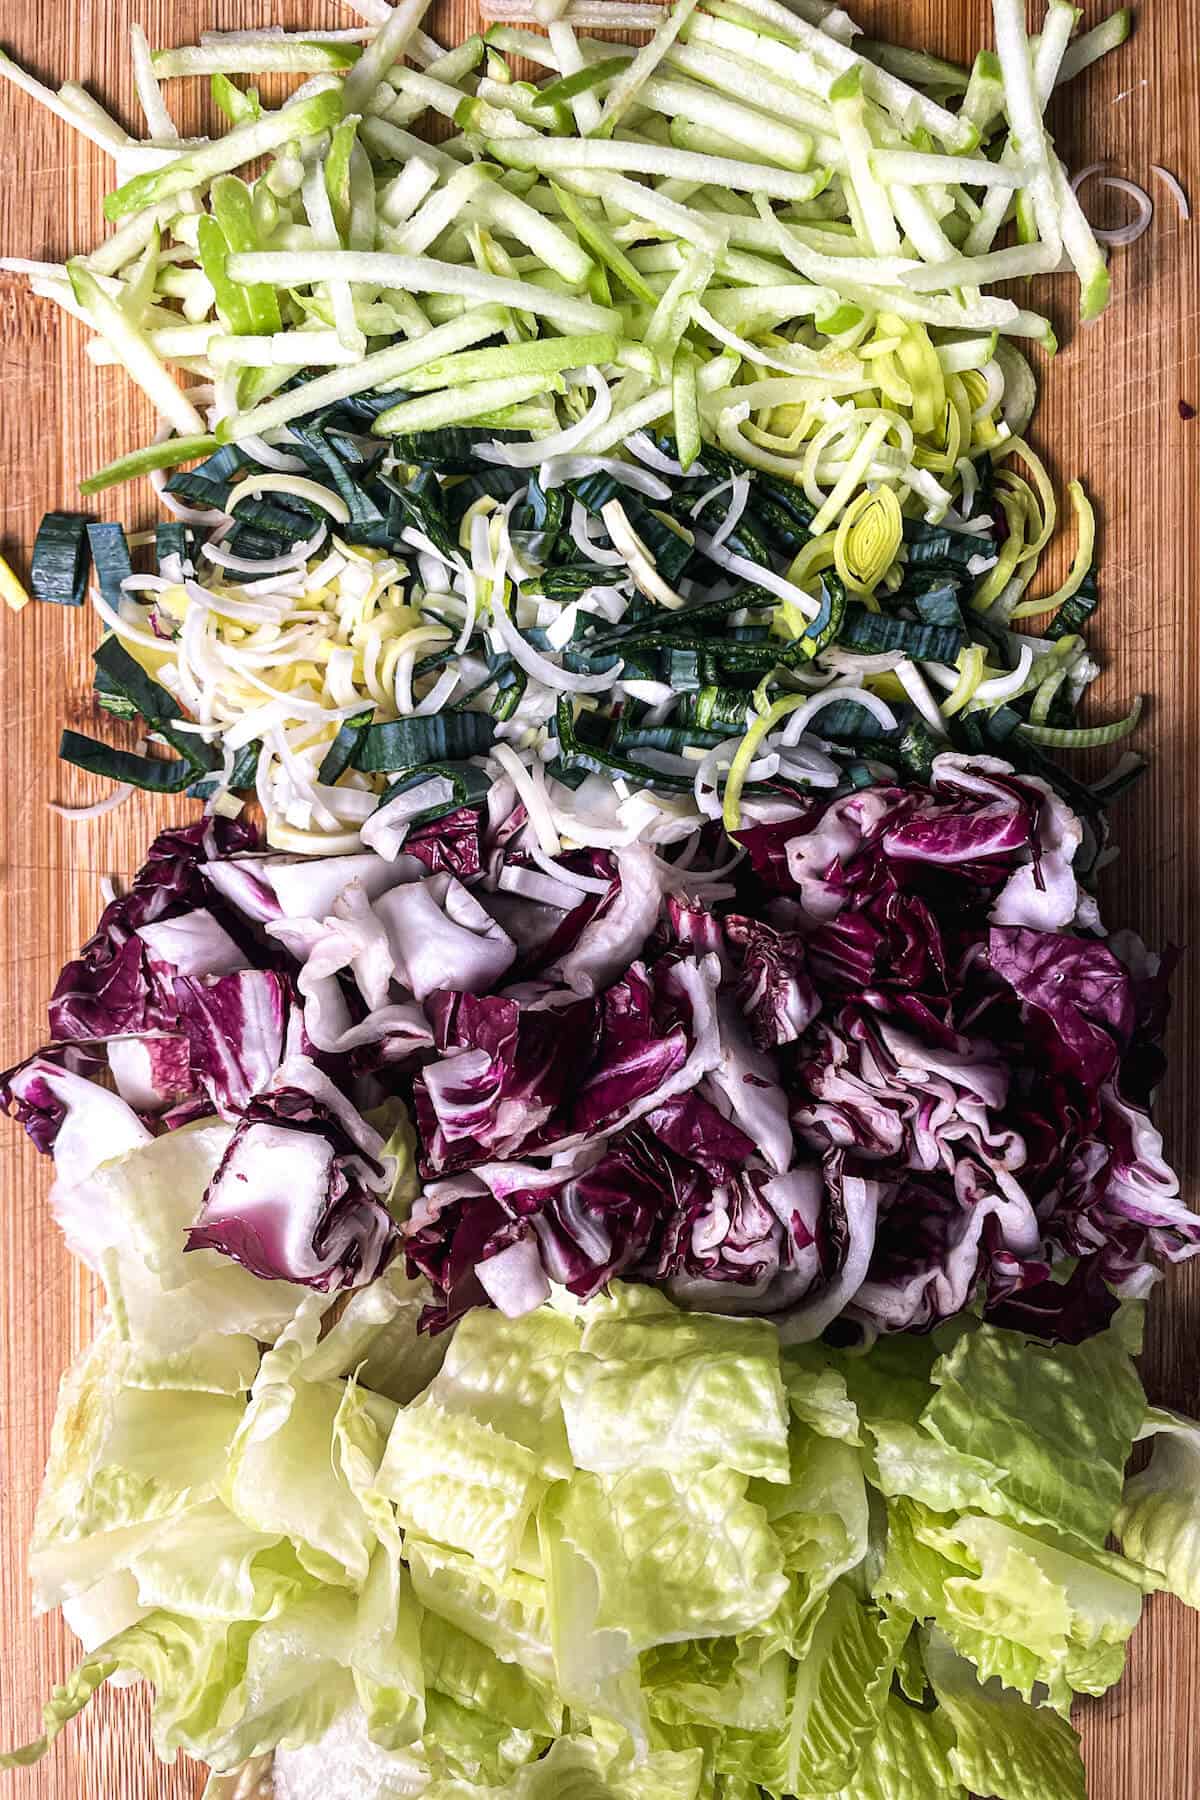 chopped salad ingredients